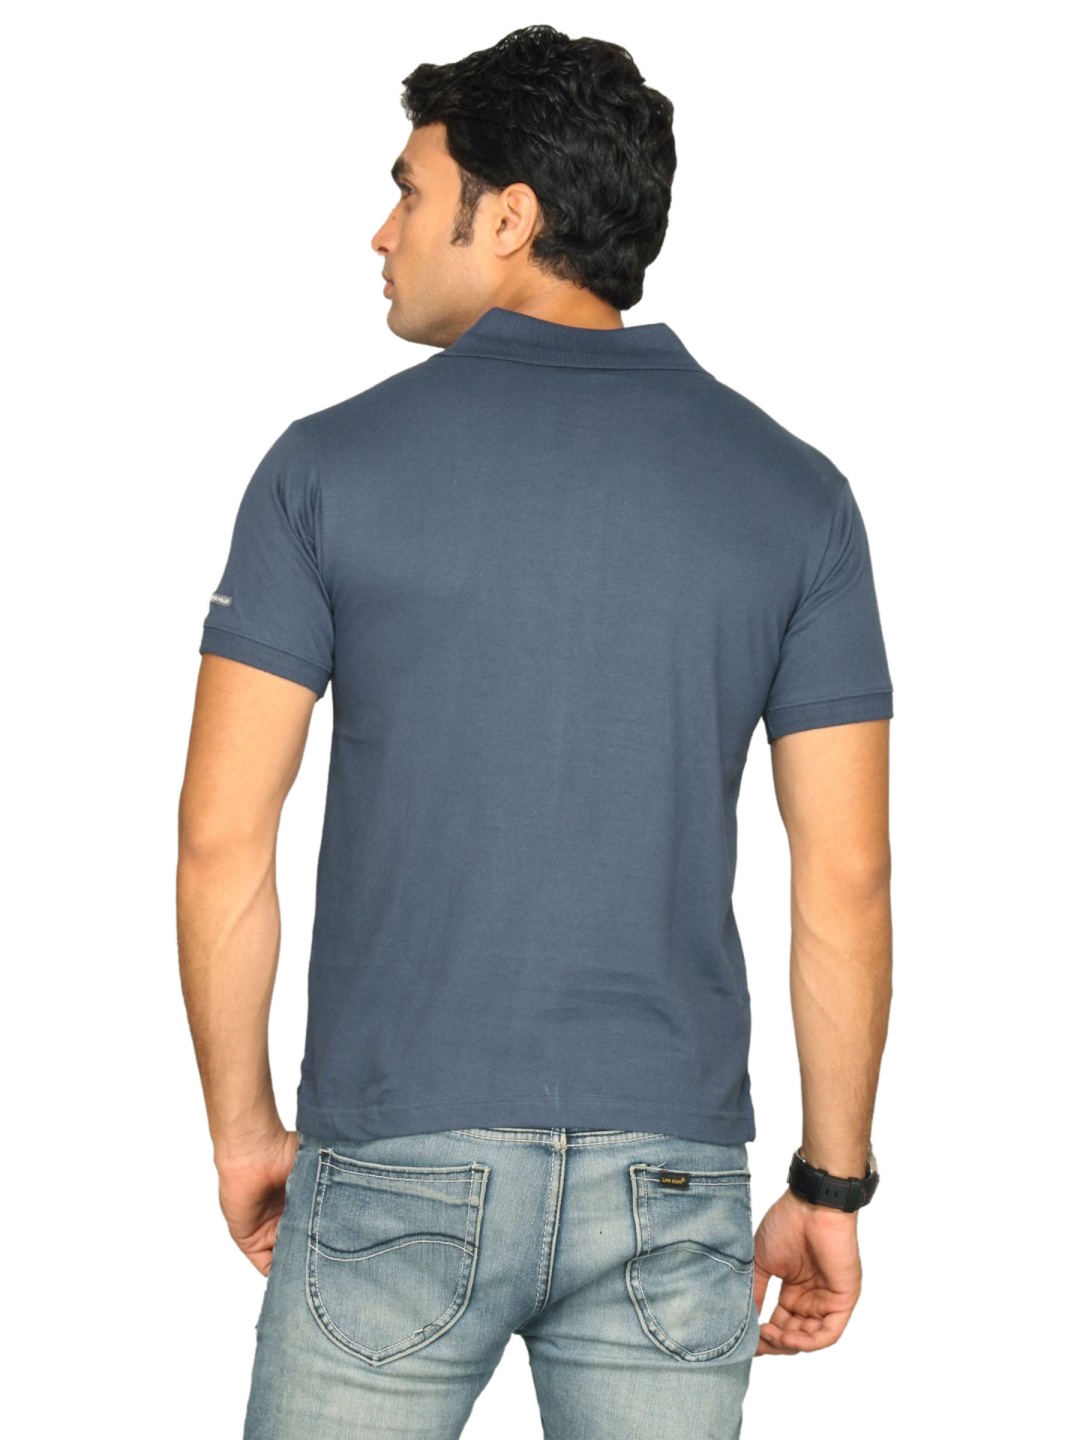 Polo T Shirts Combo Pack Flipkart